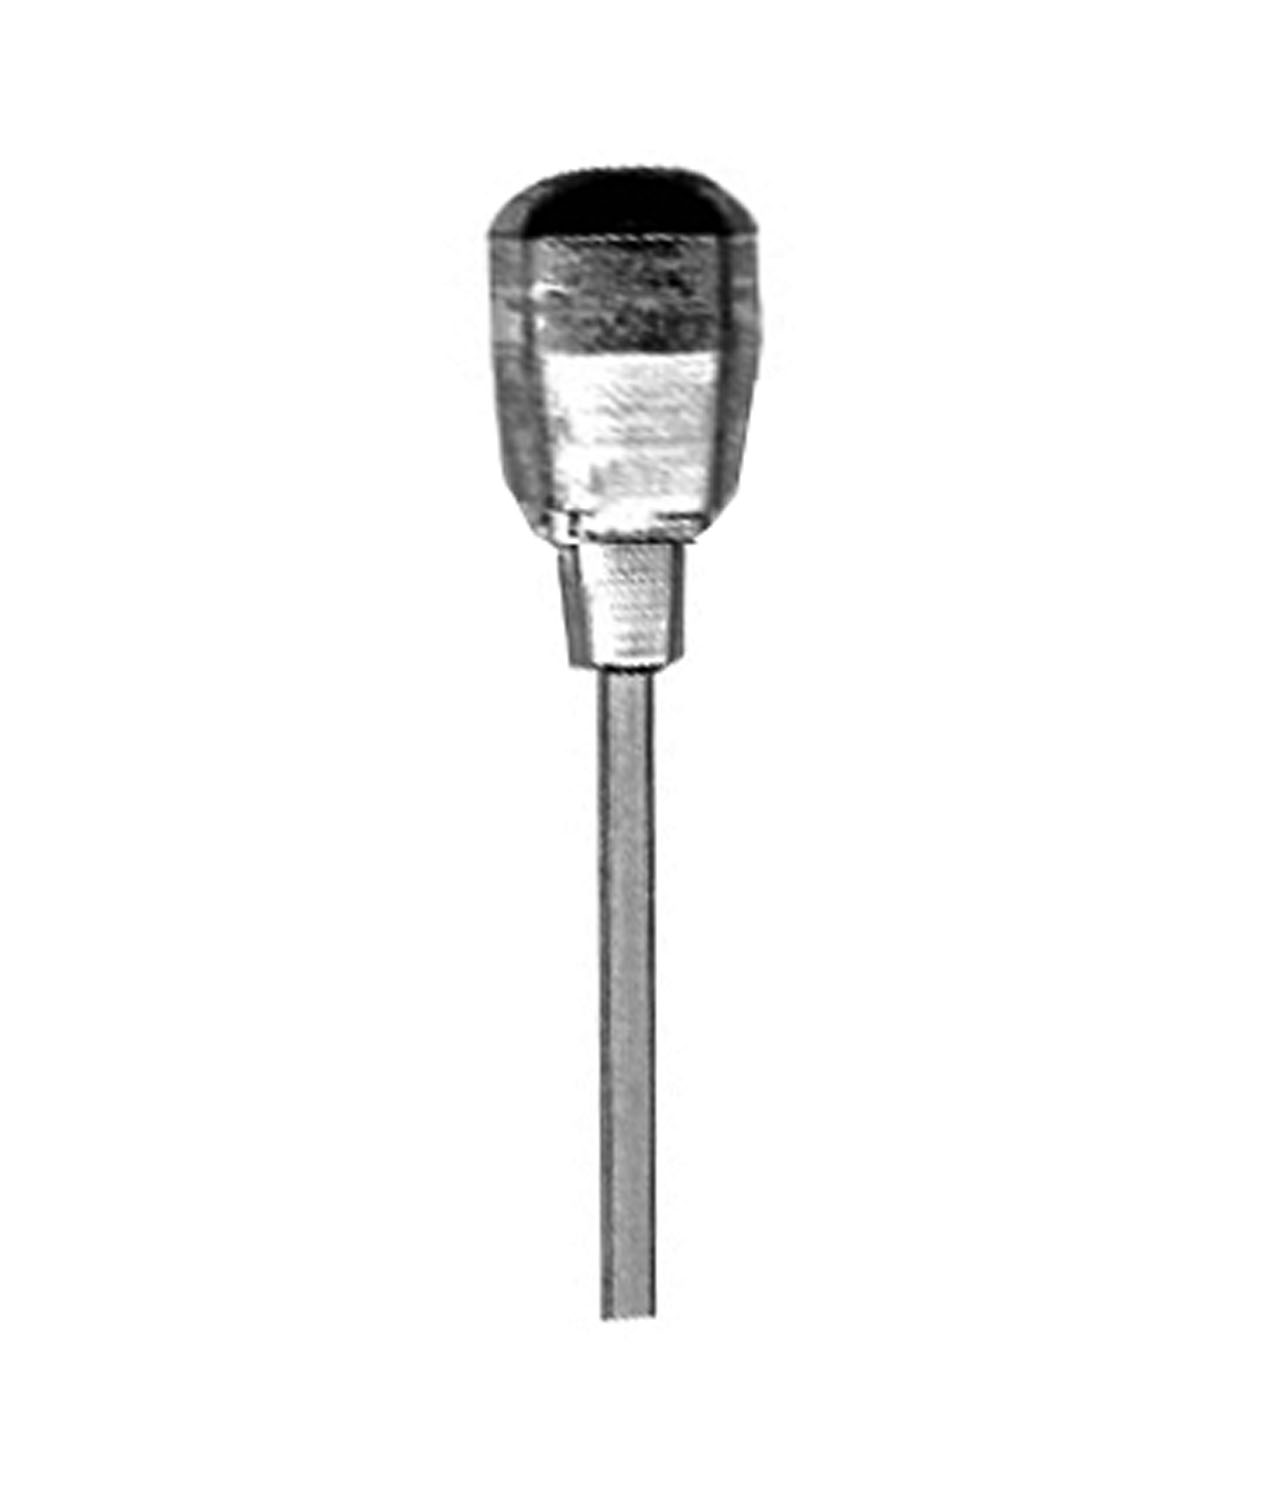 Predator - 58.5" Stainless Steel Replacement Whip For Predator Antennas - 1/8" In Diameter